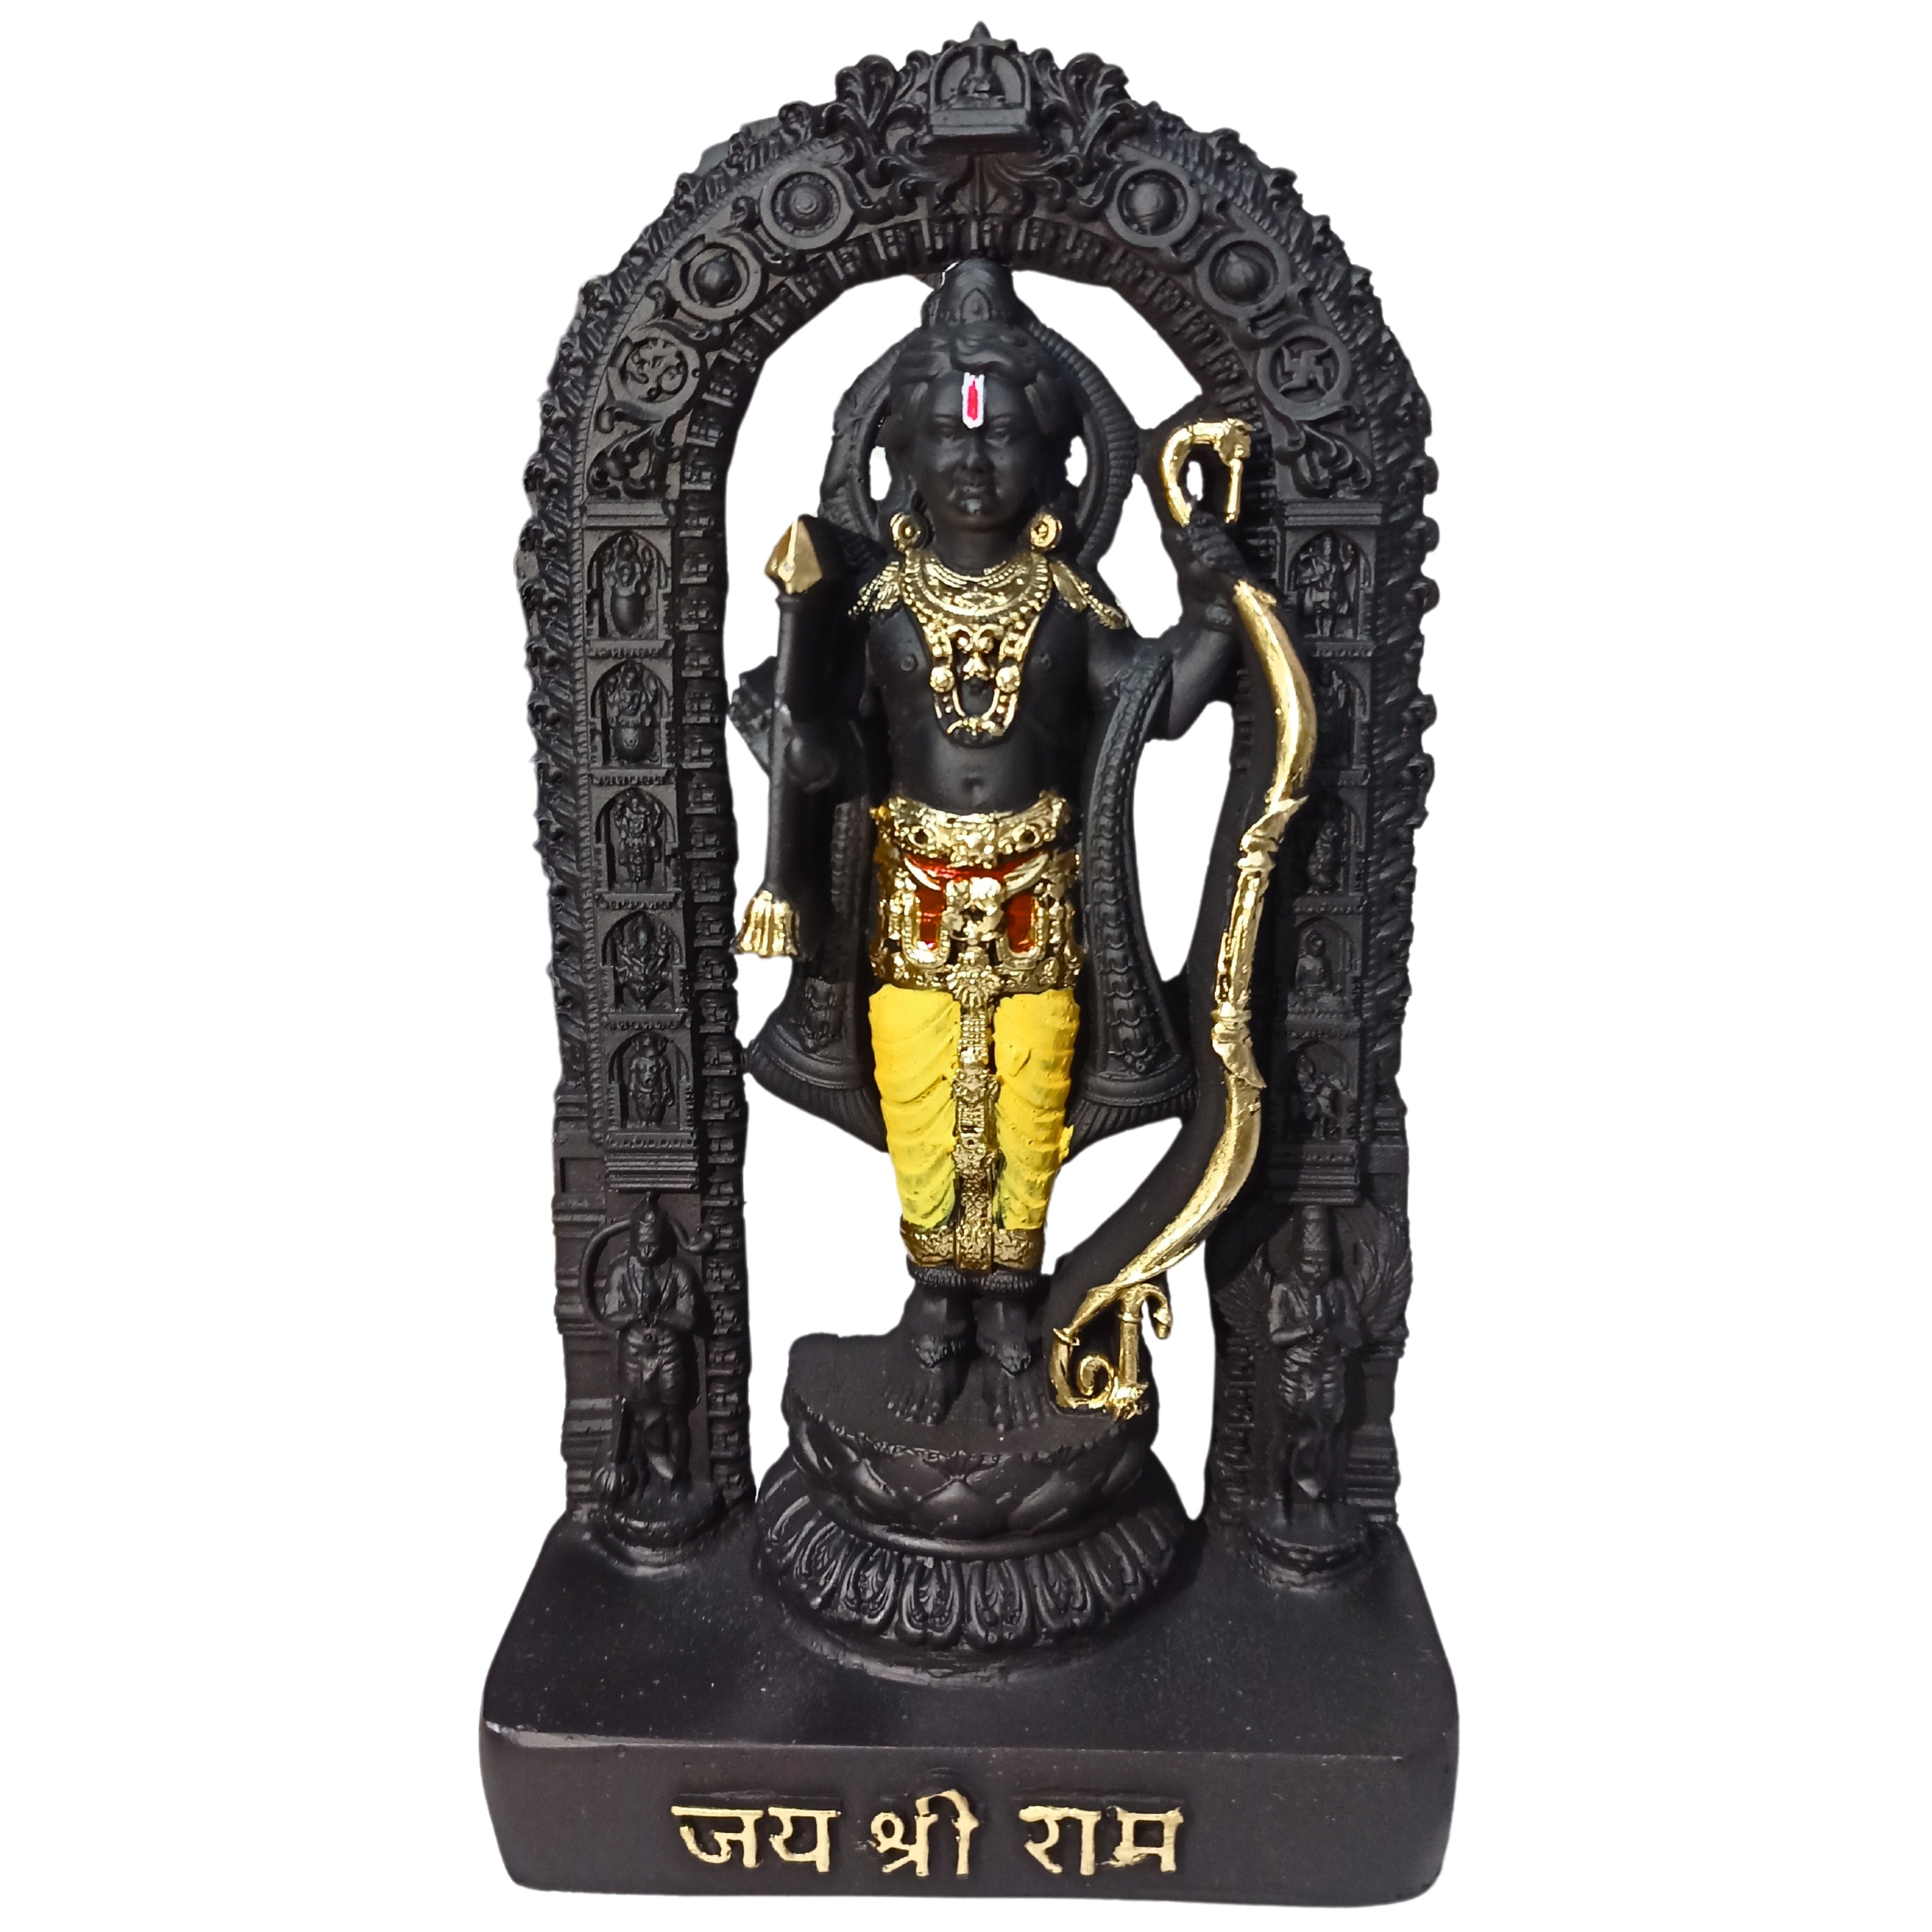 RR Crafts Lord Ram Idol/Religious Murti for Worship/Pooja (7.5 X 4 Inch) Showpiece for Home Decor.Raam/Ram Lalla/Shri Ram Mandir, Ayodhya wale, Gift Item(Multicolour)